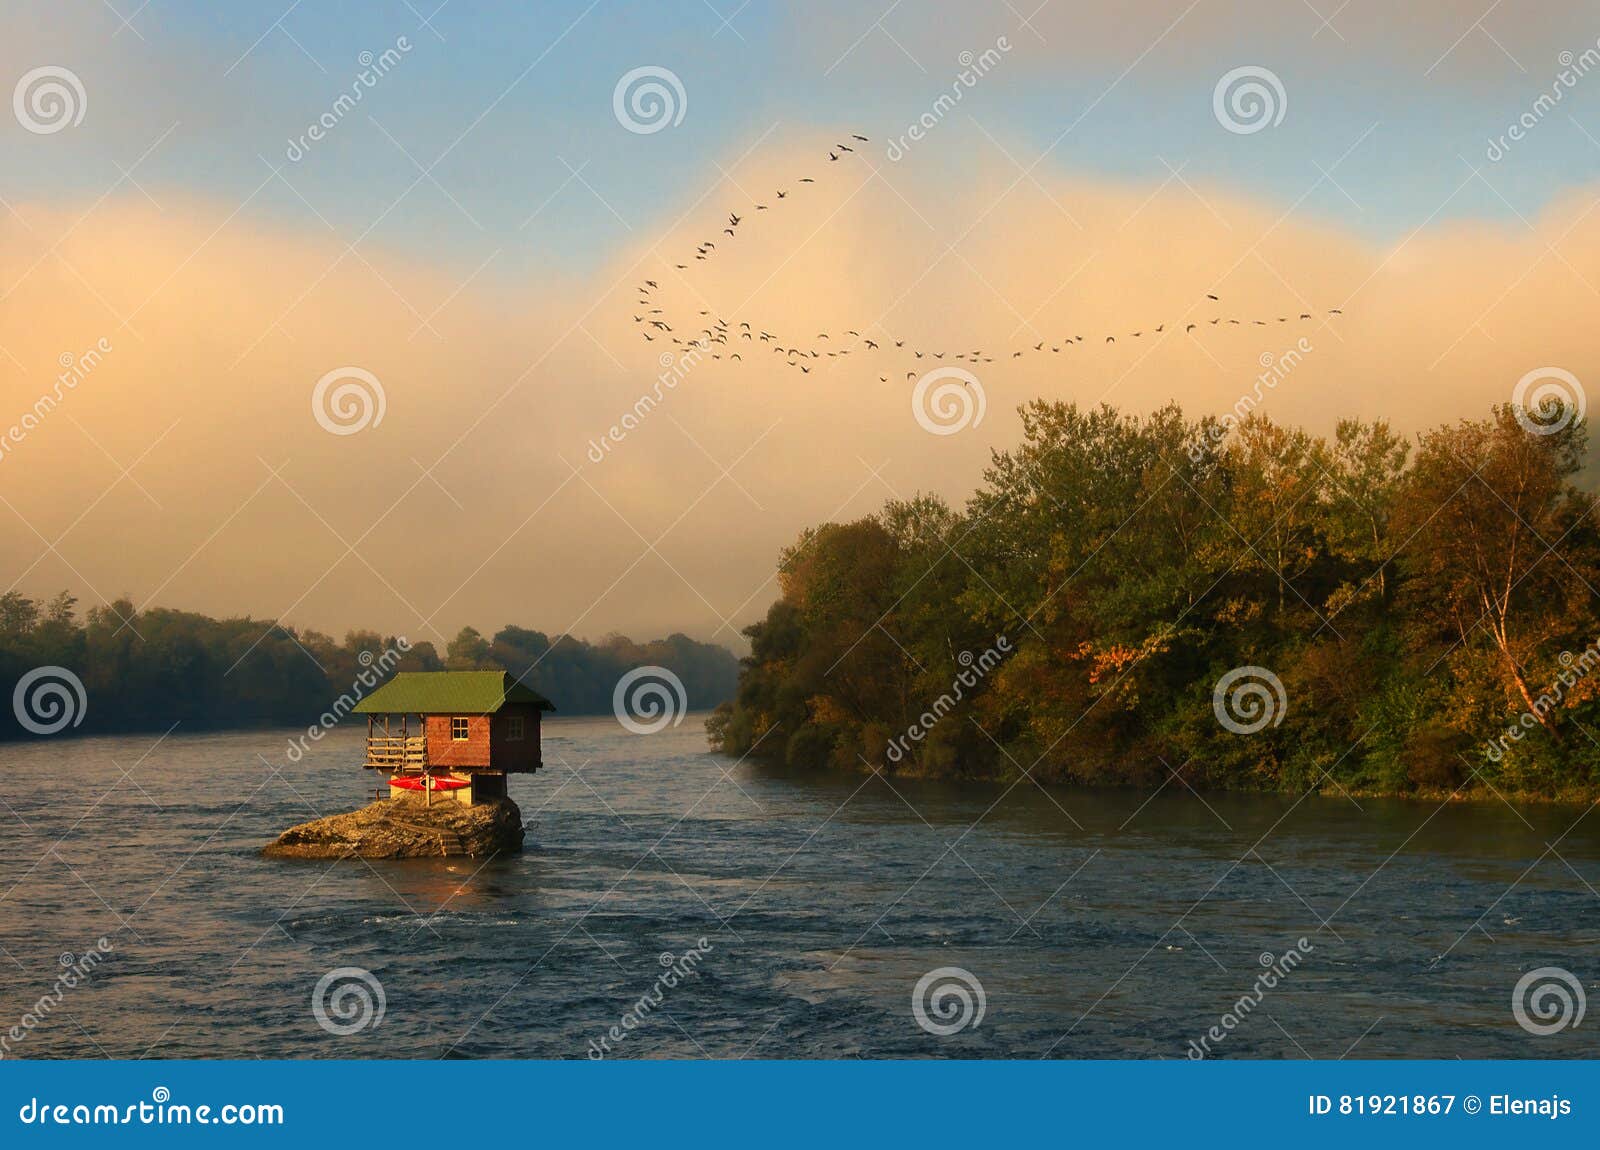 house in river drina near bajina basta and flock of flying birds, western serbia